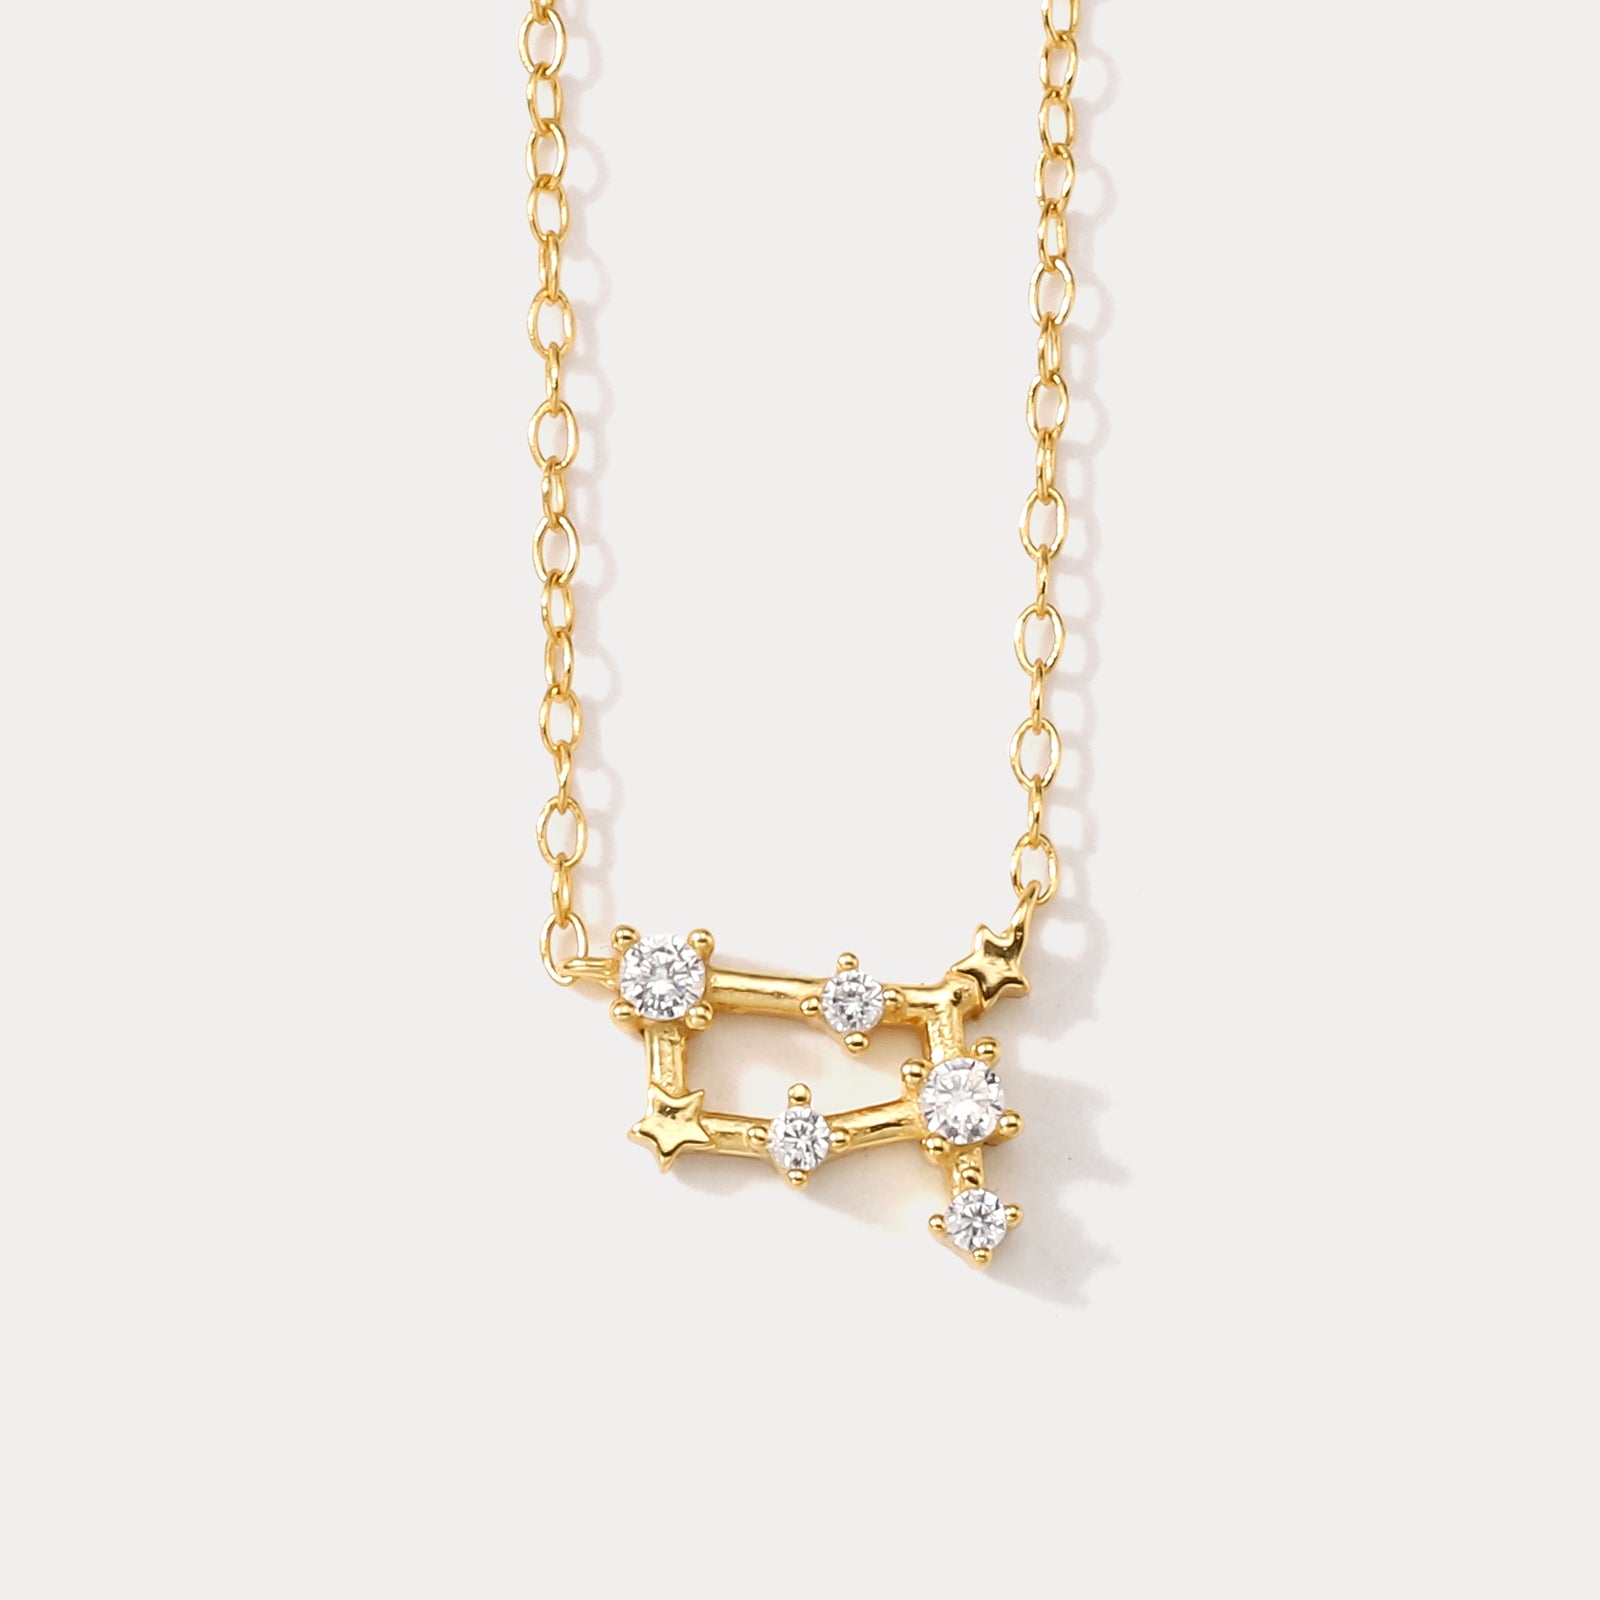 Selenichast Constellation Silver Necklace - Gemini